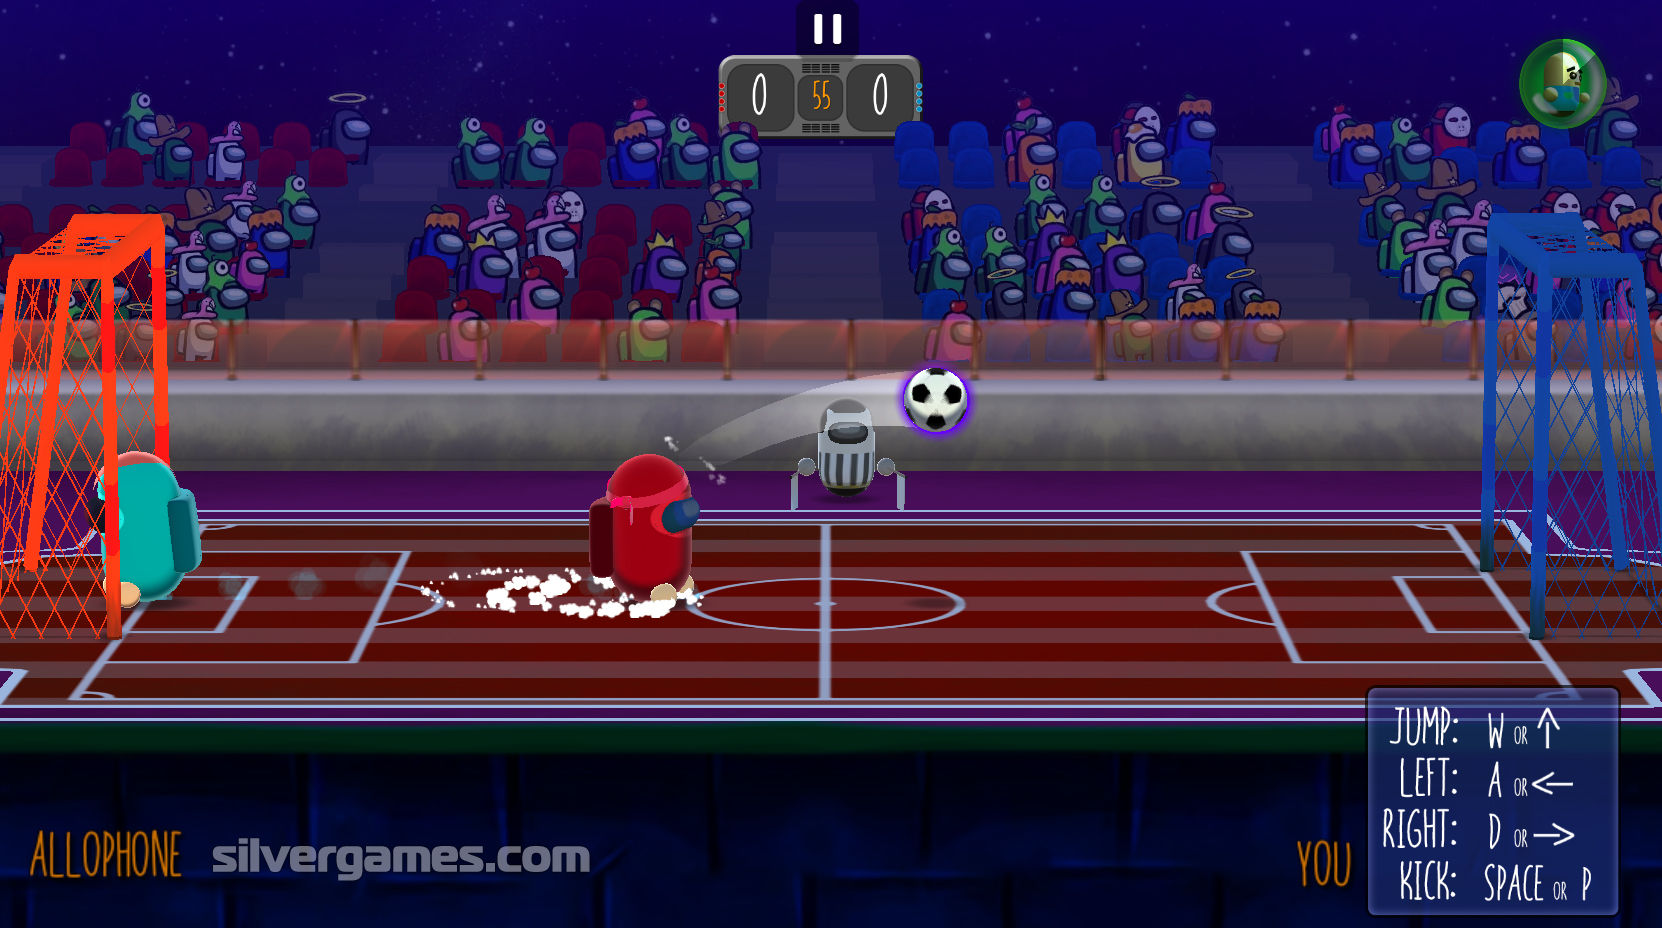 Soccer Random 🕹️ Two Player Games